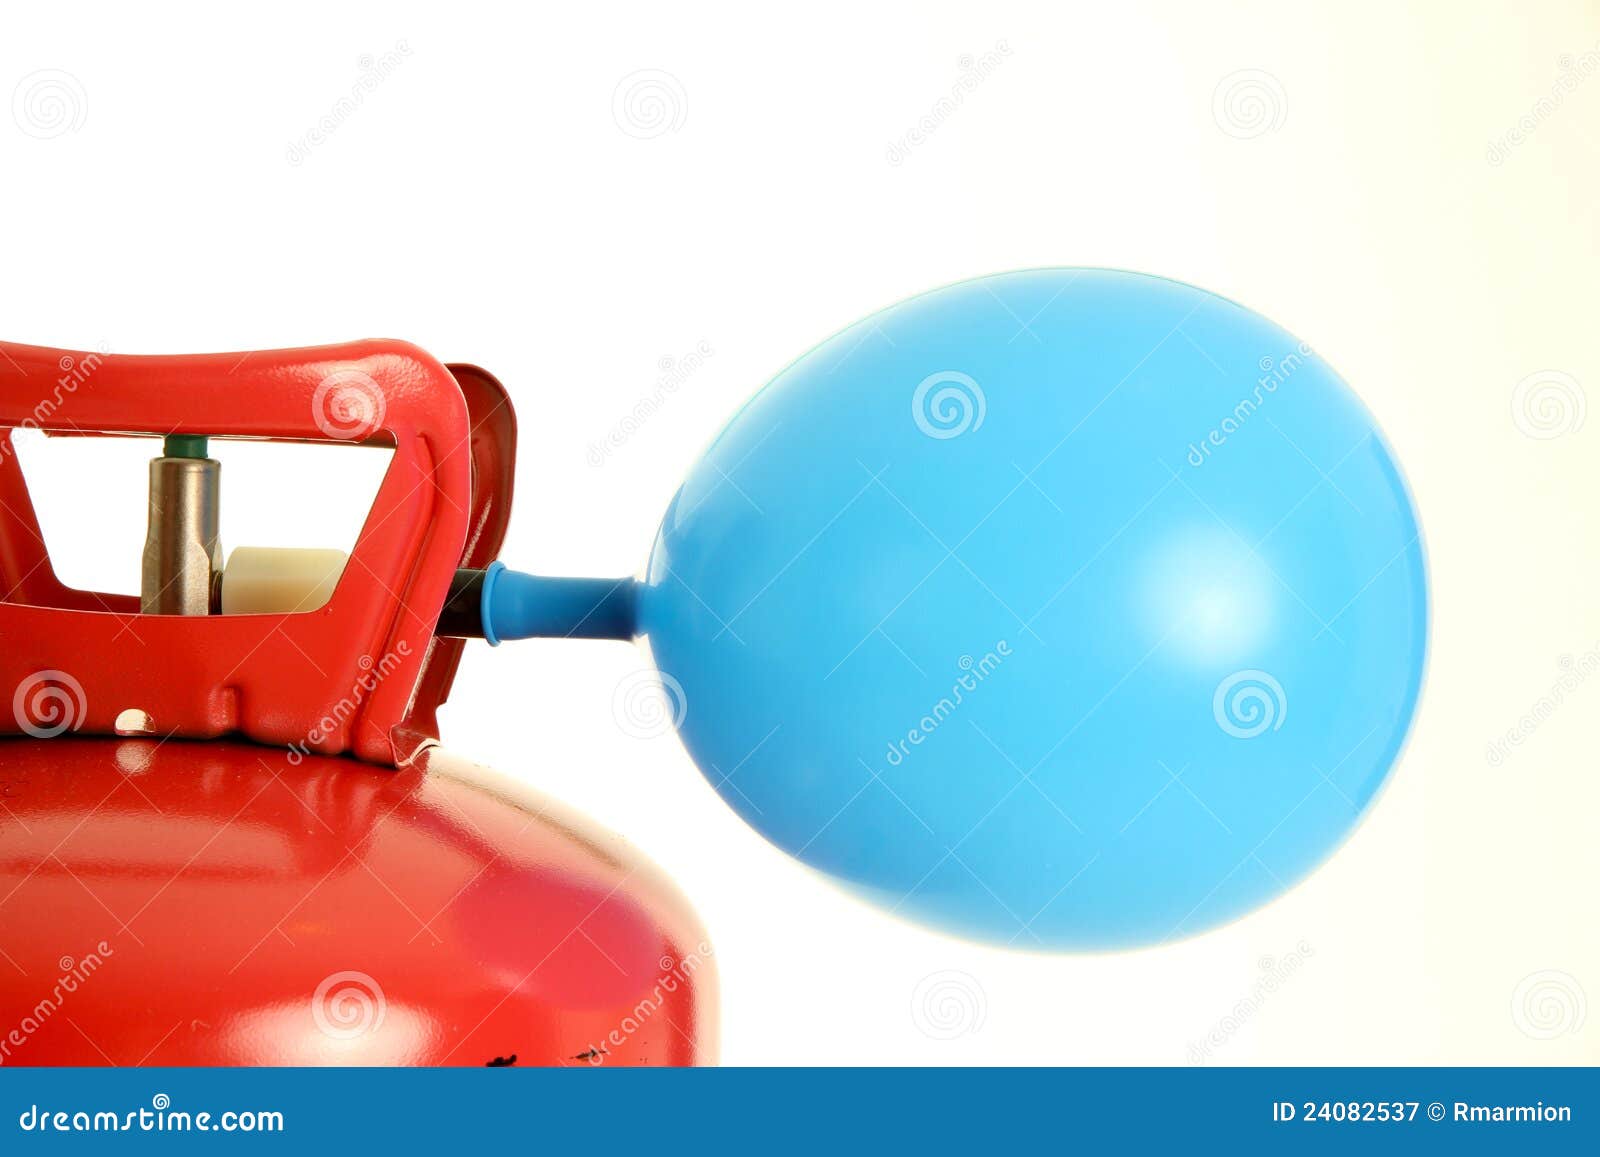 balloon and helium